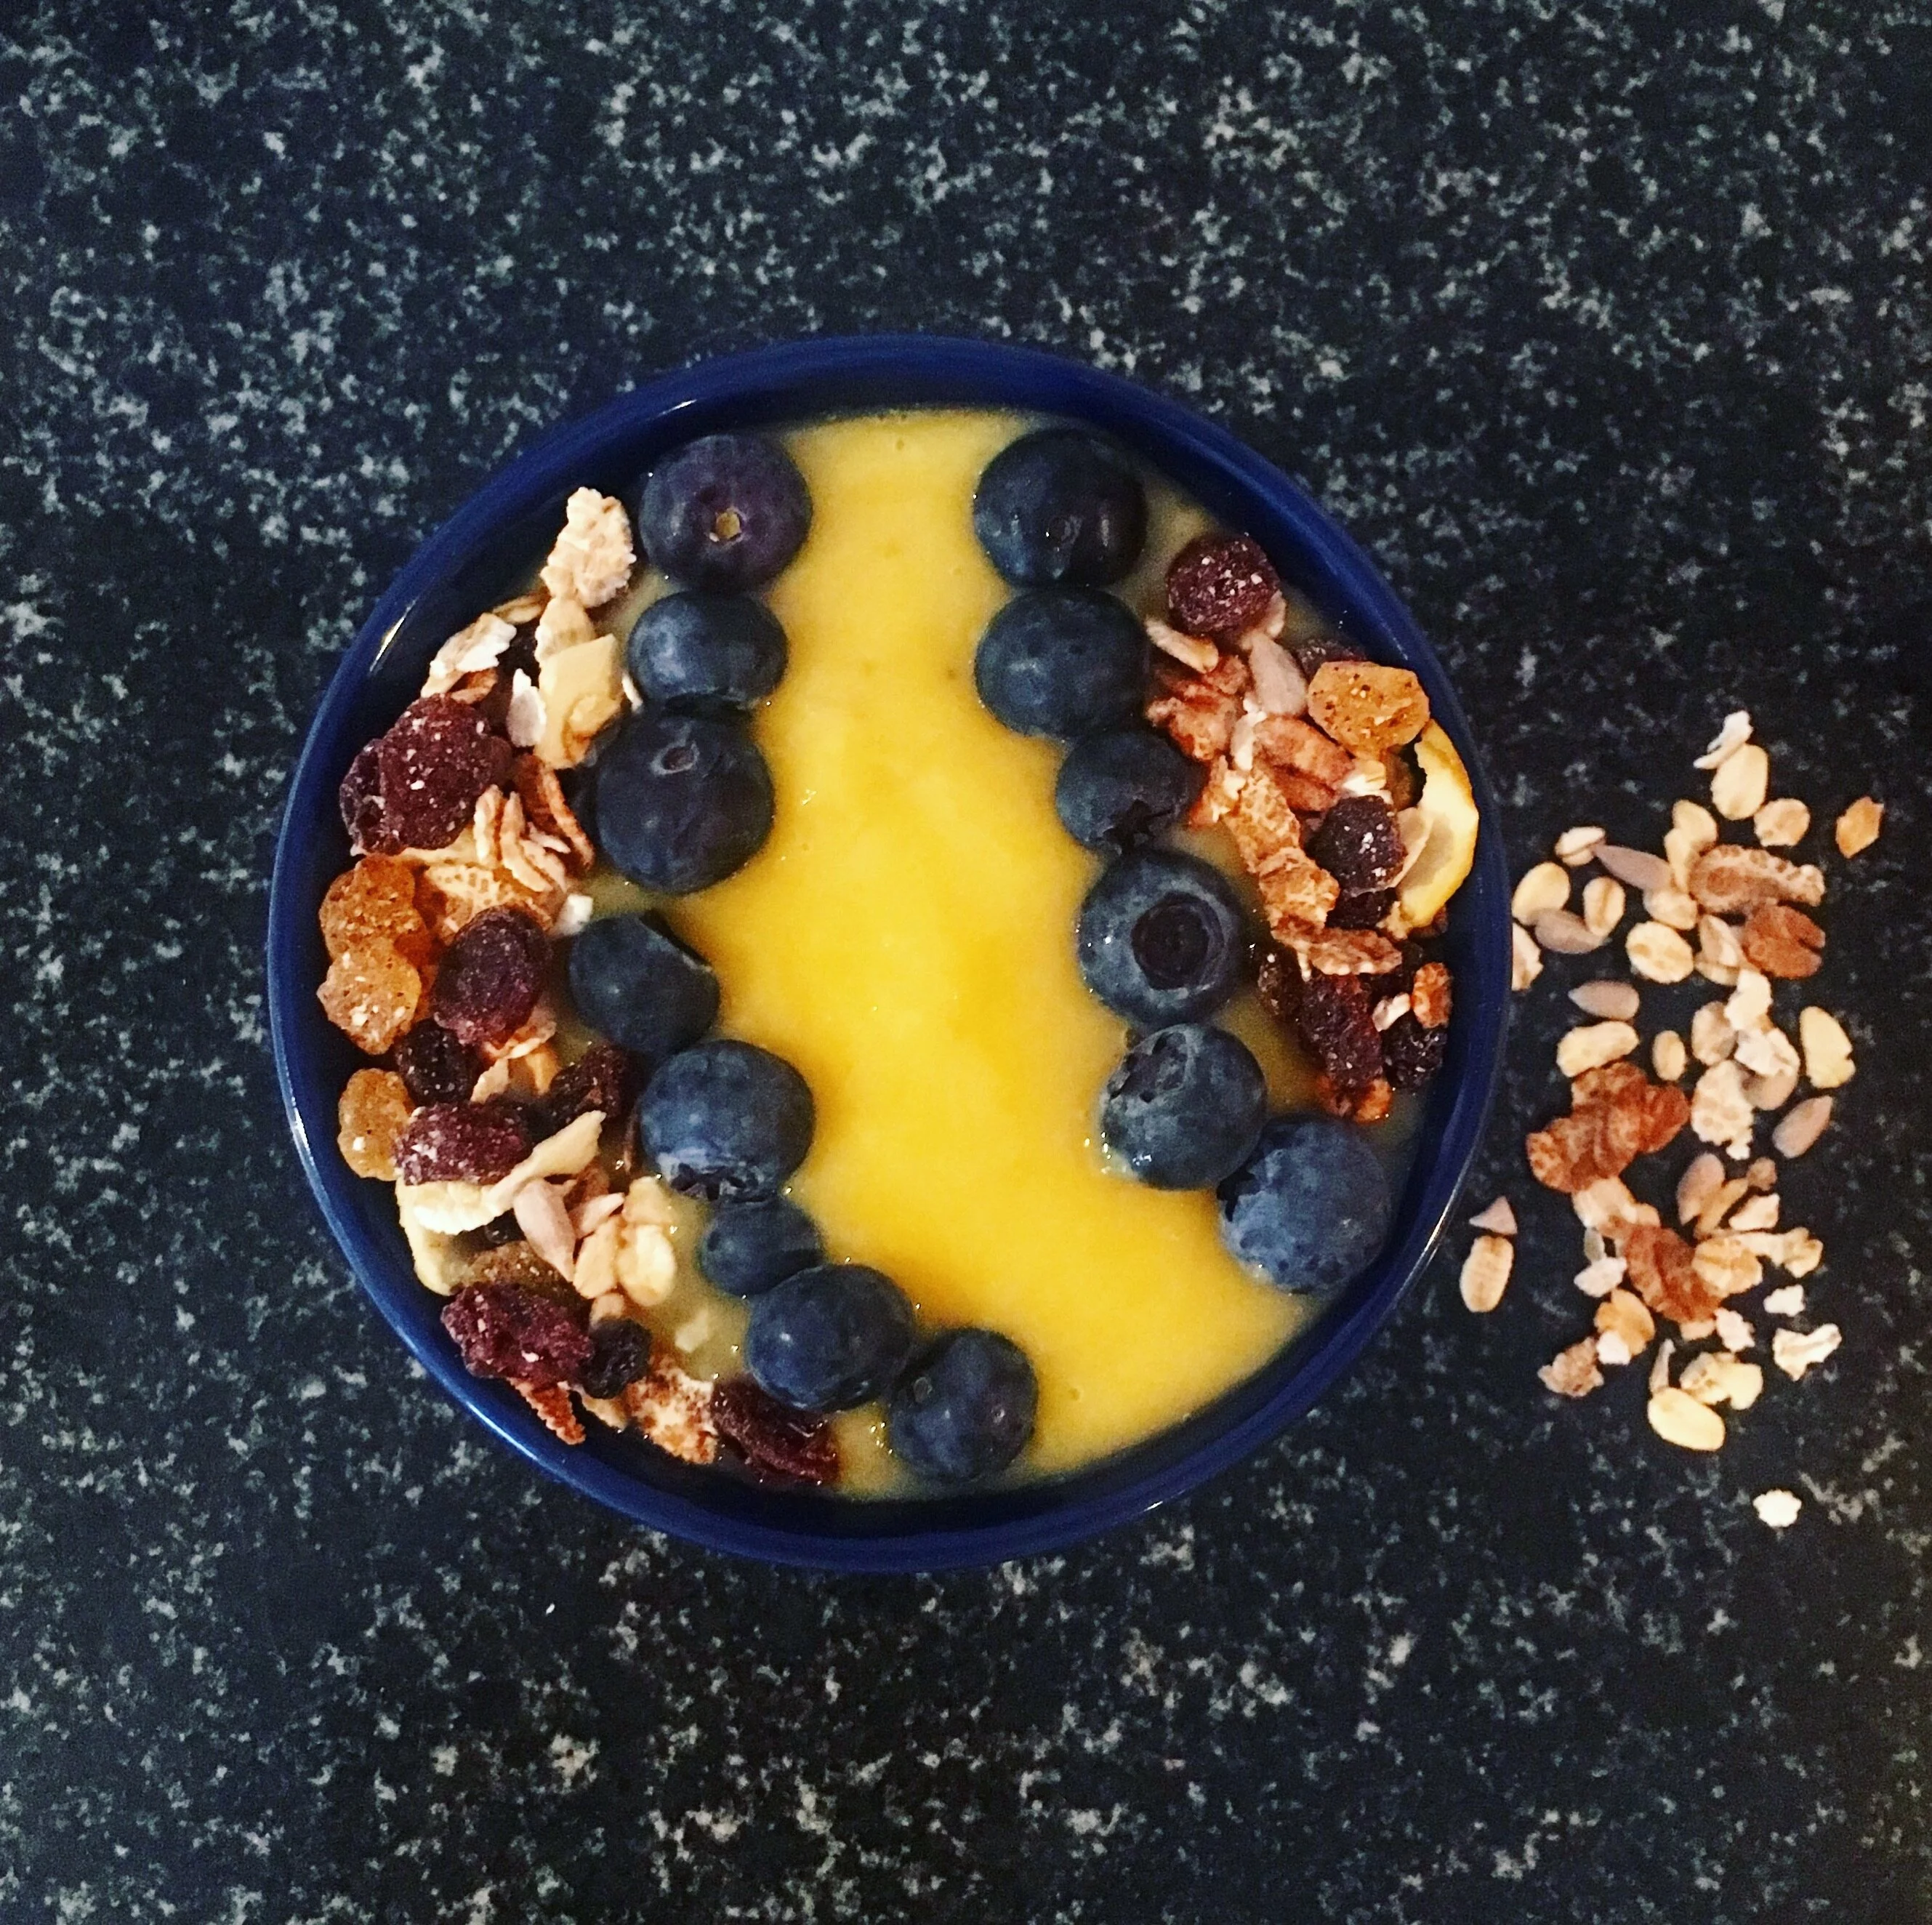 mango smoothie bowl recipe quick and easy ideas toppings blueberries granola banana almond milk